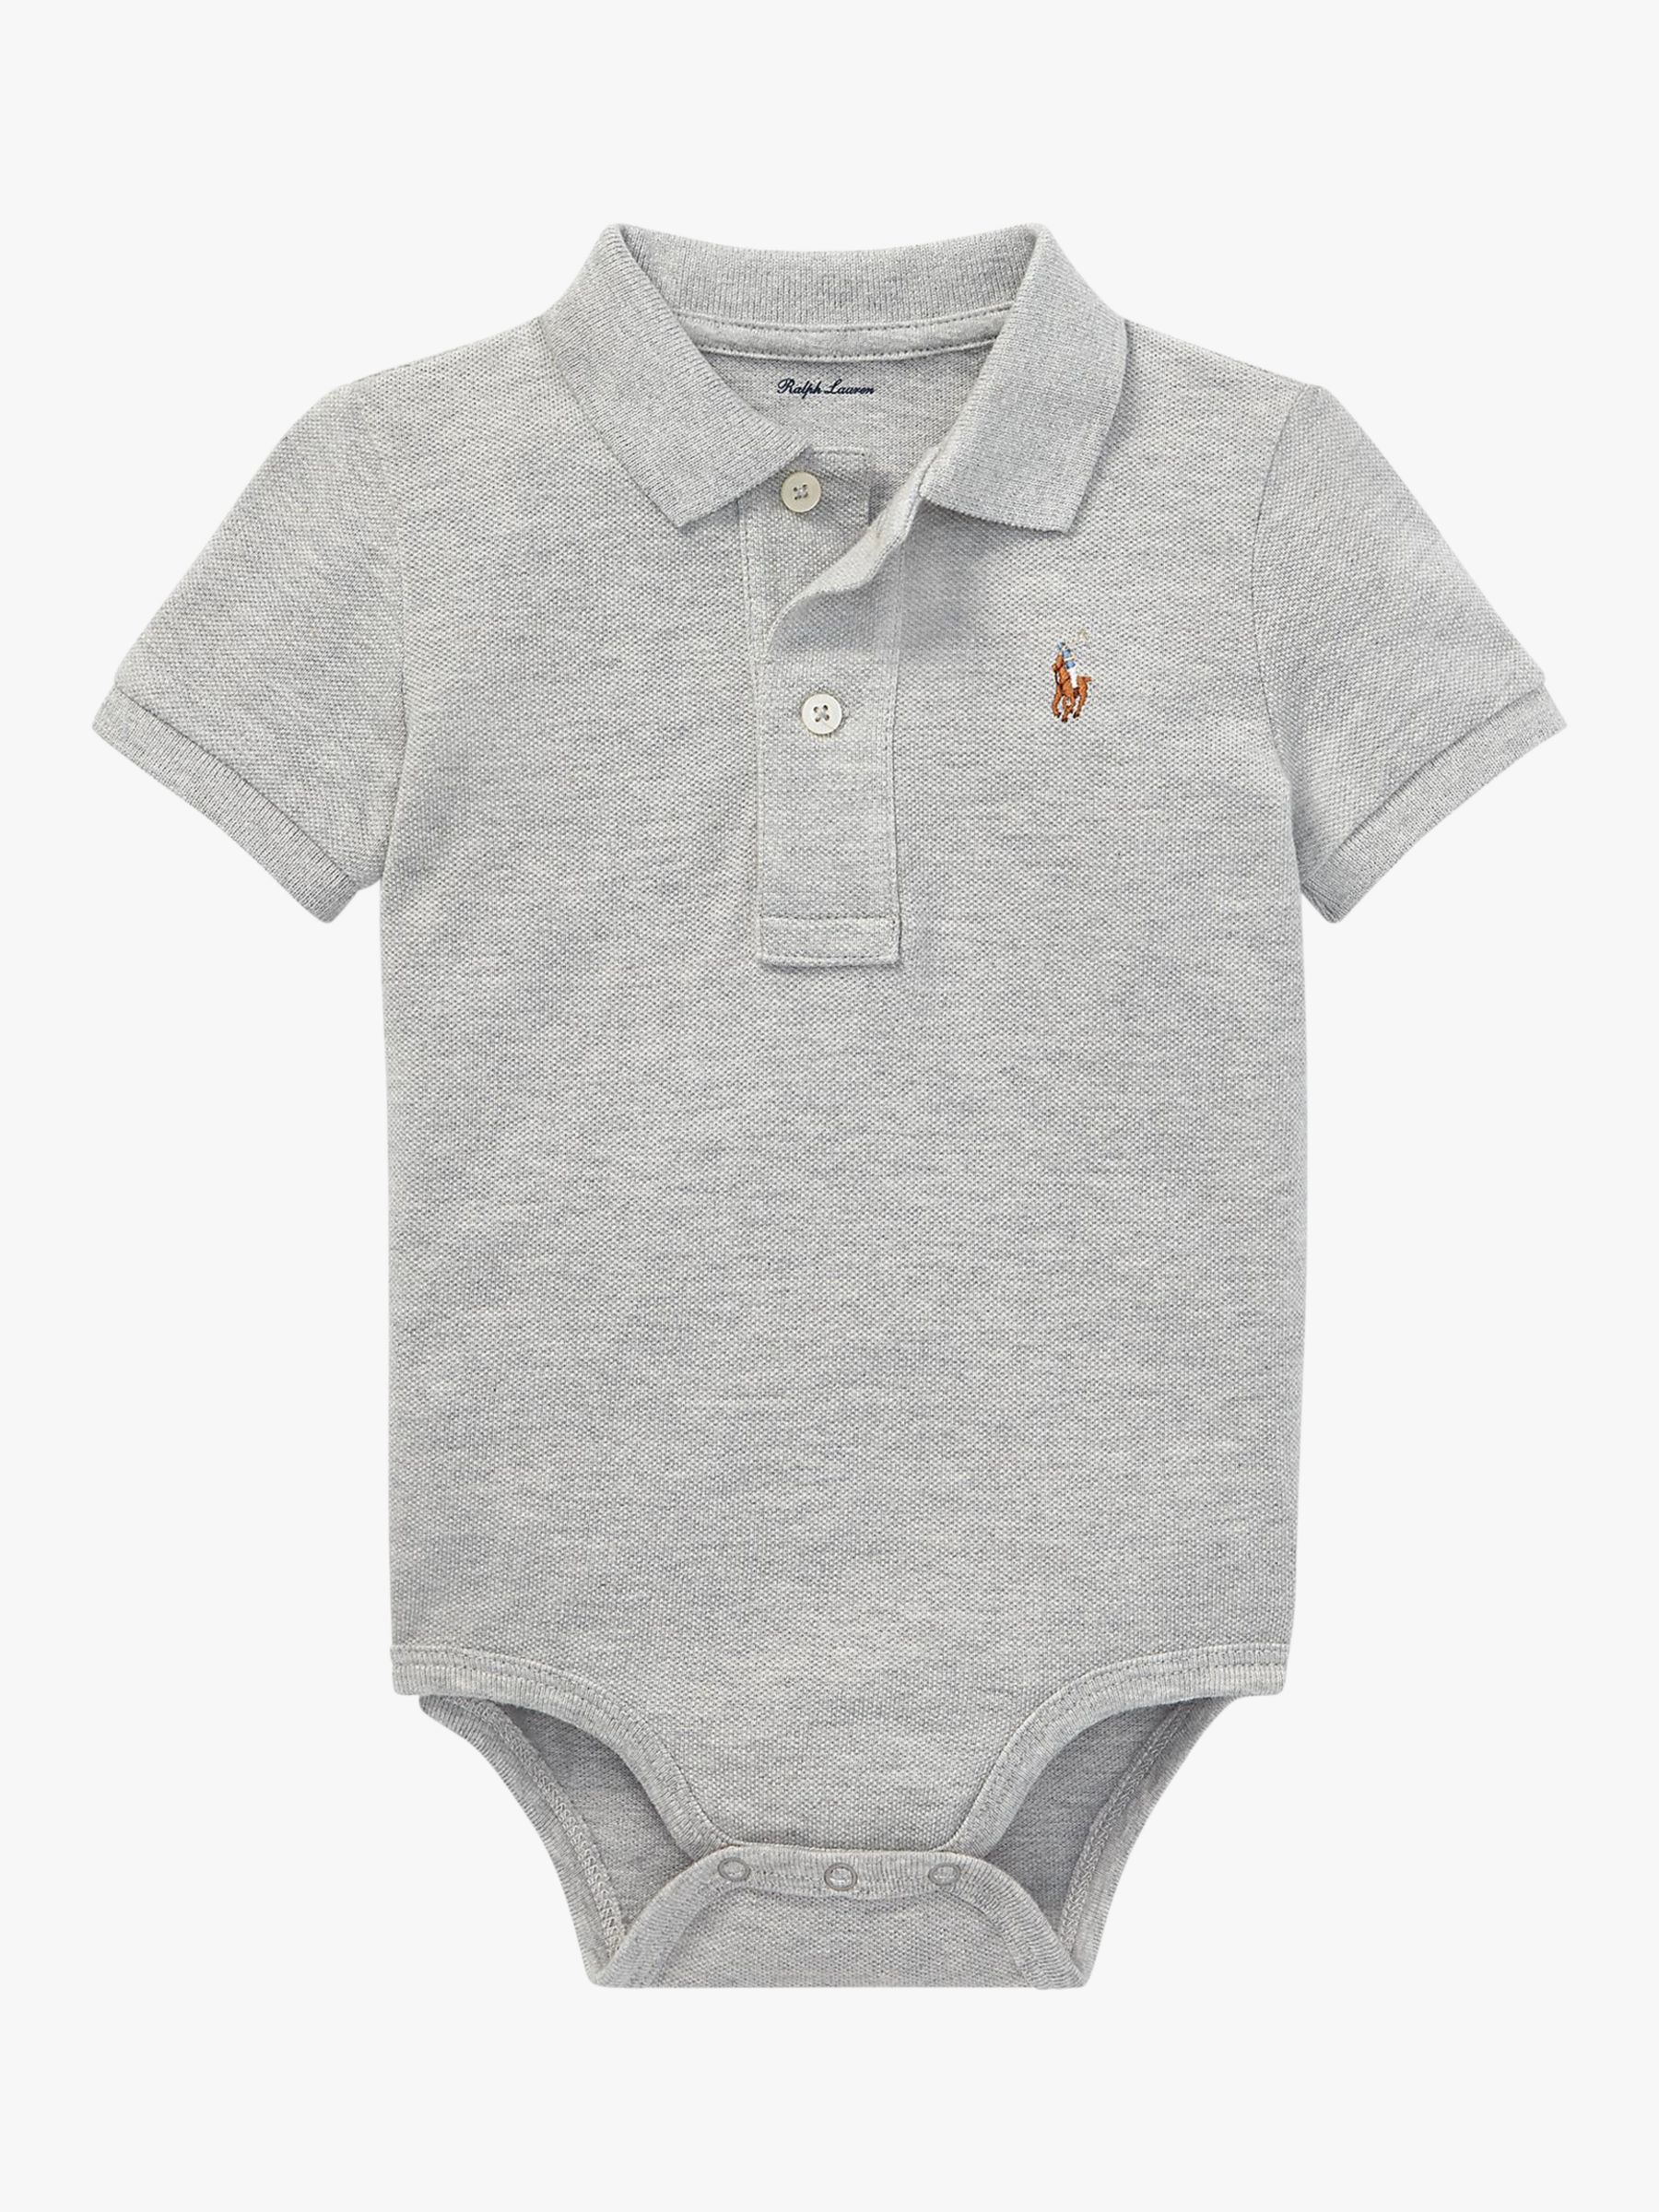 Verbinding Steil Tutor Polo Ralph Lauren Baby Bodysuit, Grey